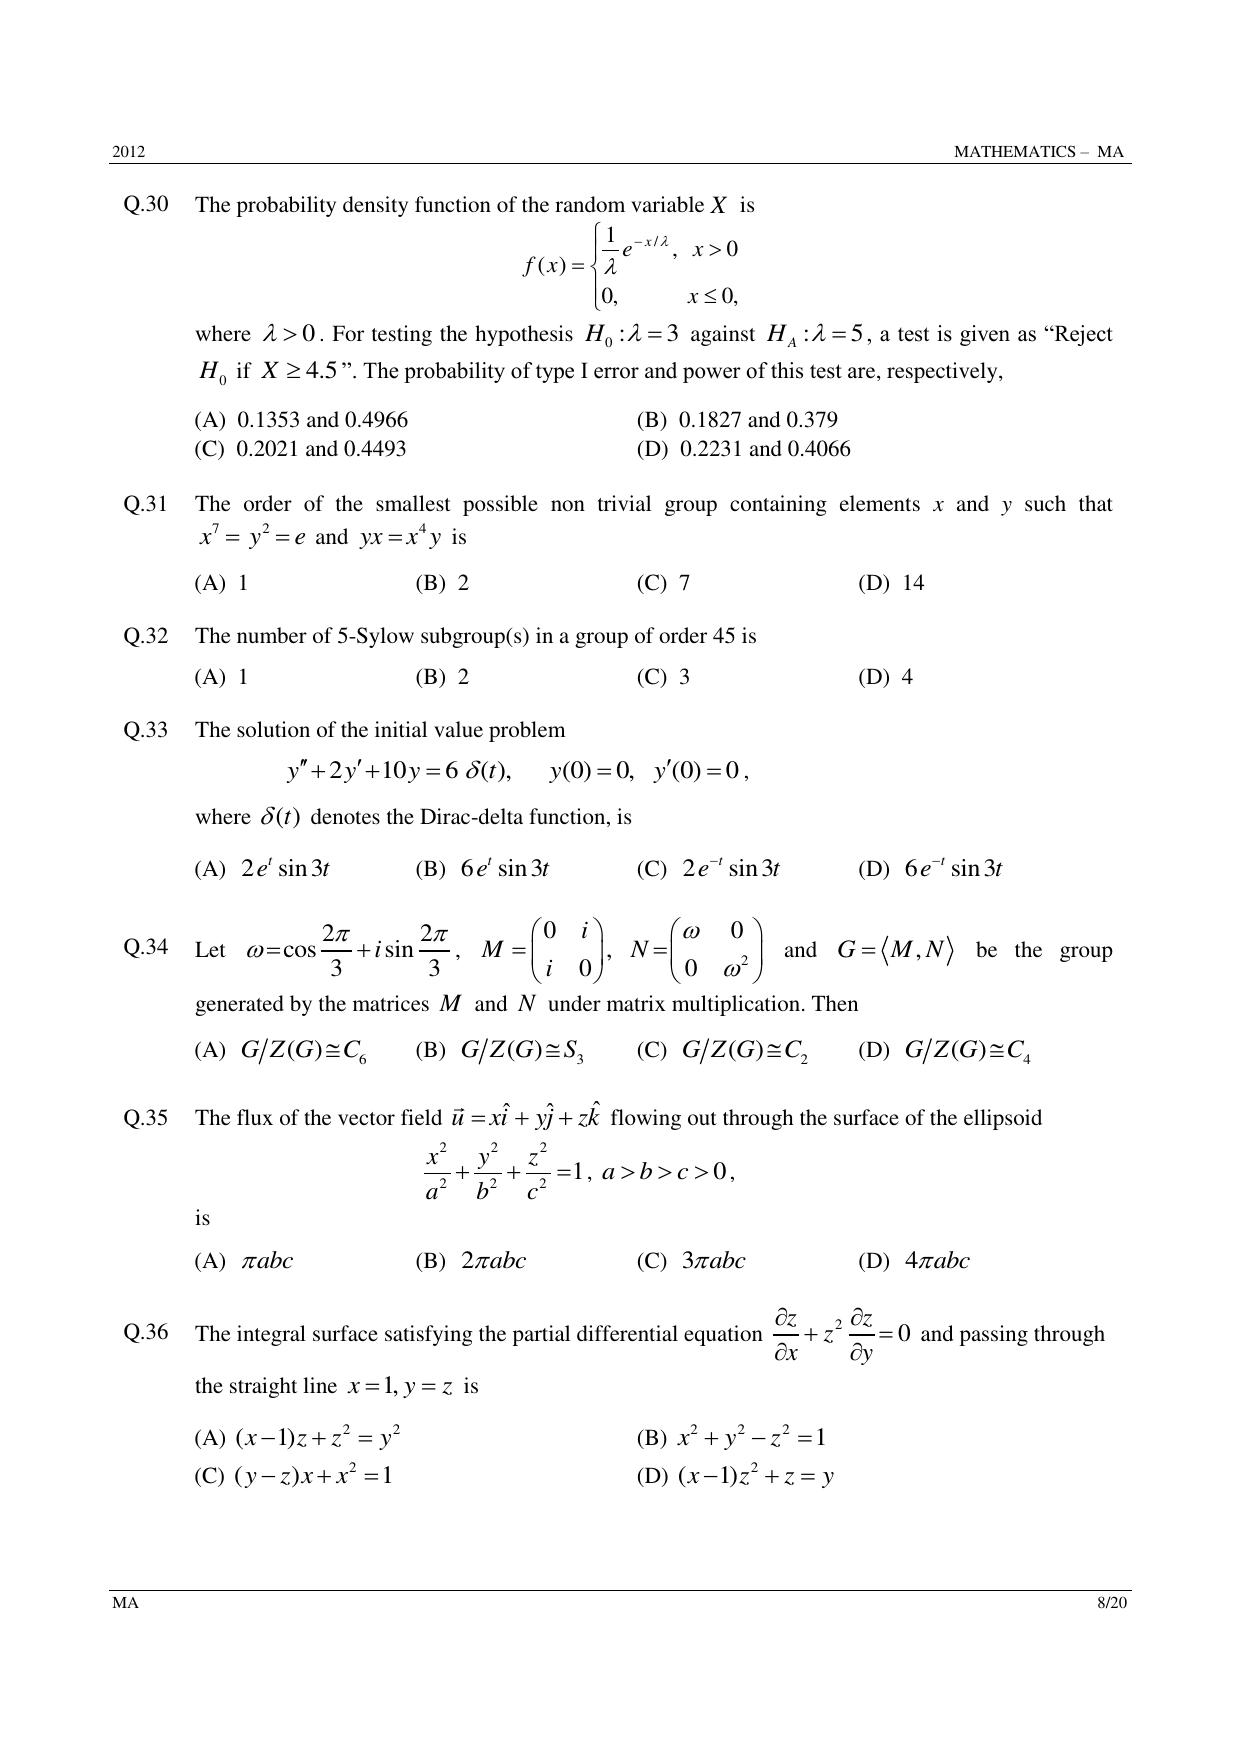 GATE 2012 Mathematics (MA) Question Paper with Answer Key - Page 8